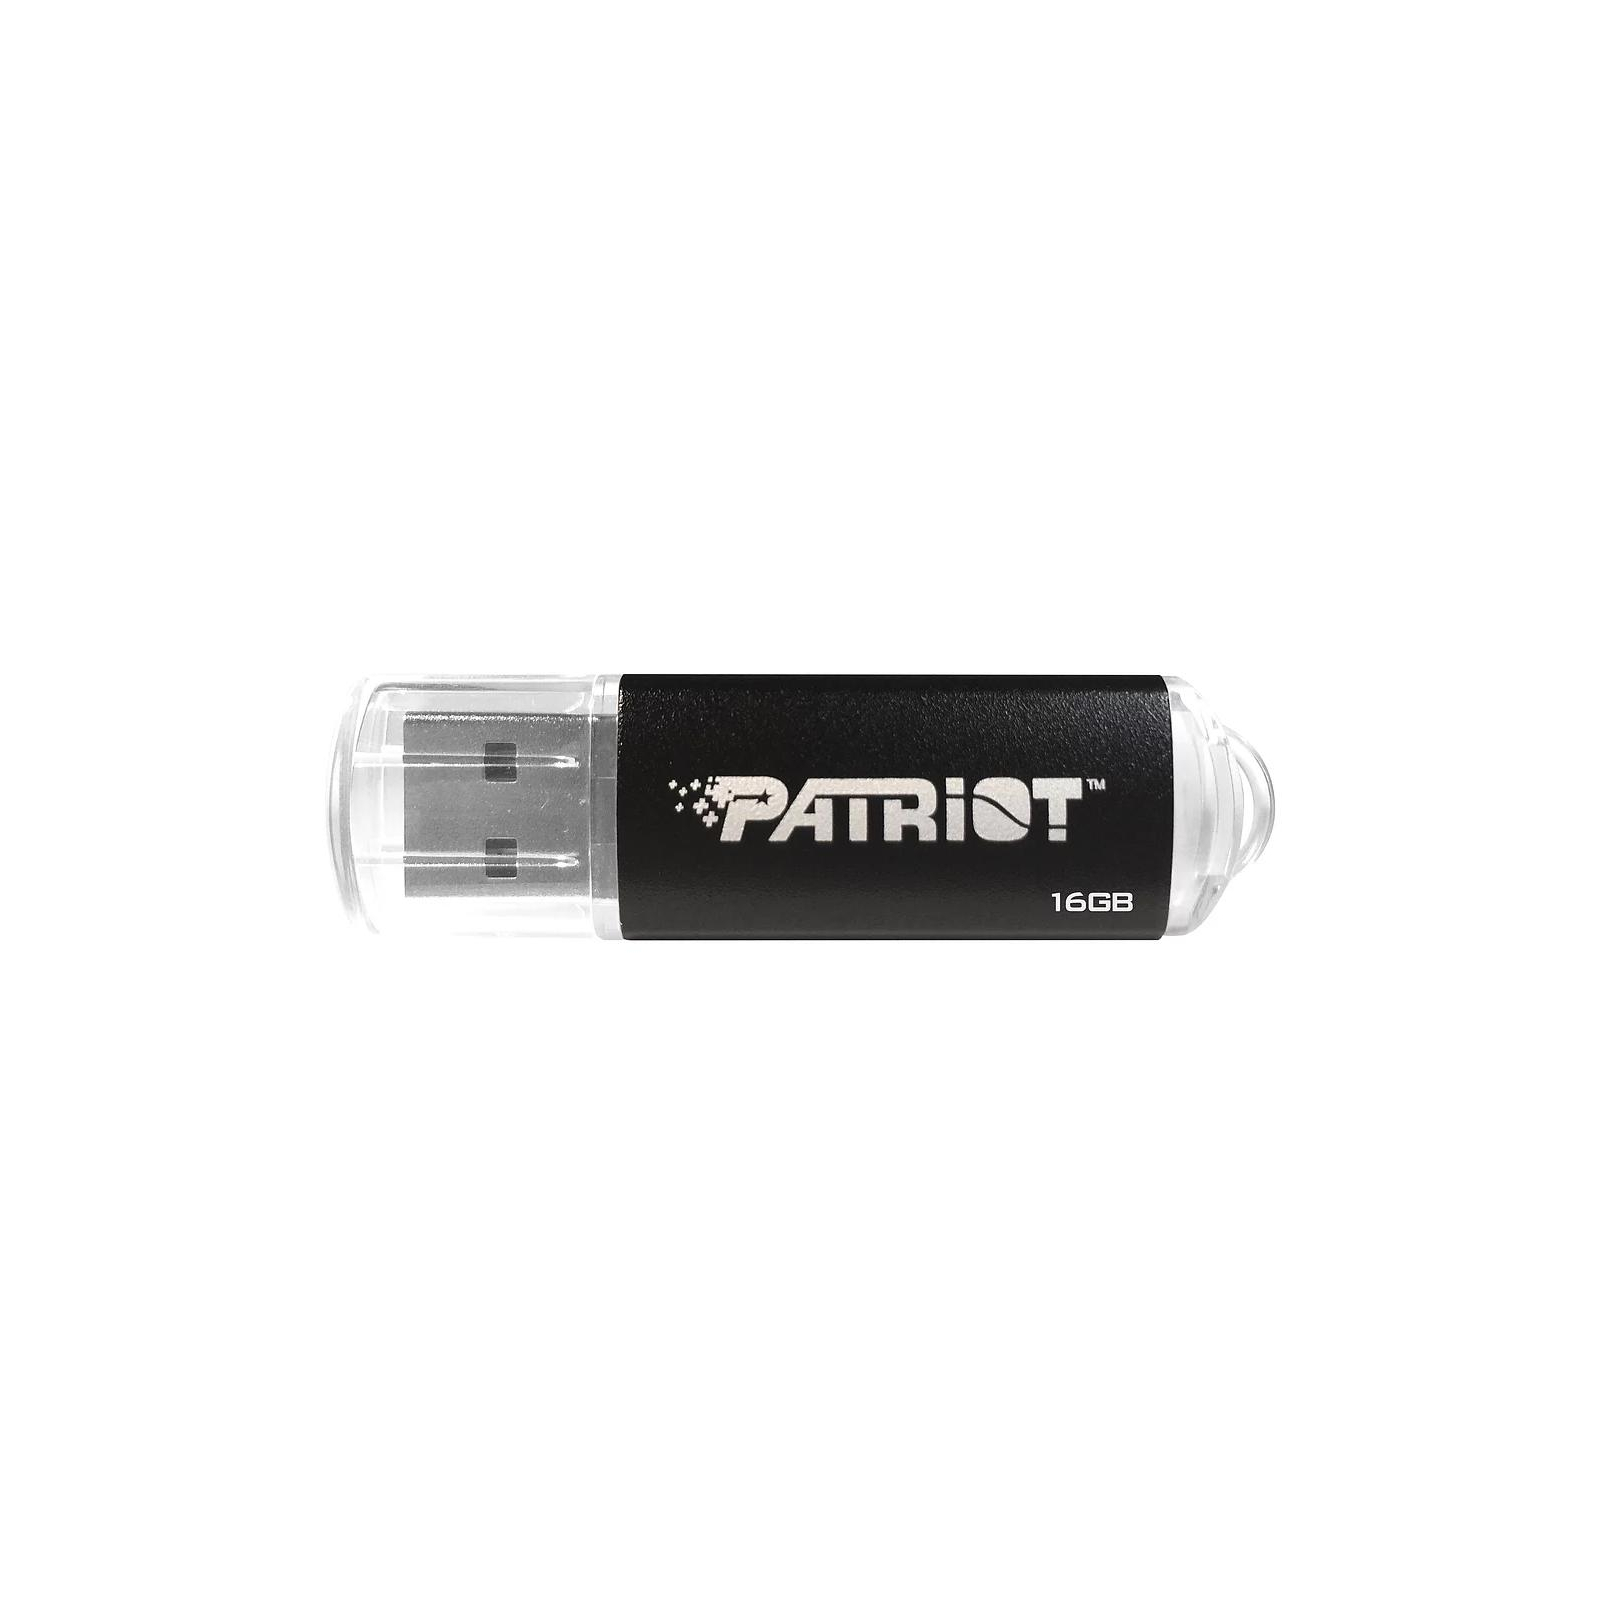 USB флеш накопитель Patriot 64GB Xporter Pulse Black USB 2.0 (PSF64GXPPBUSB)